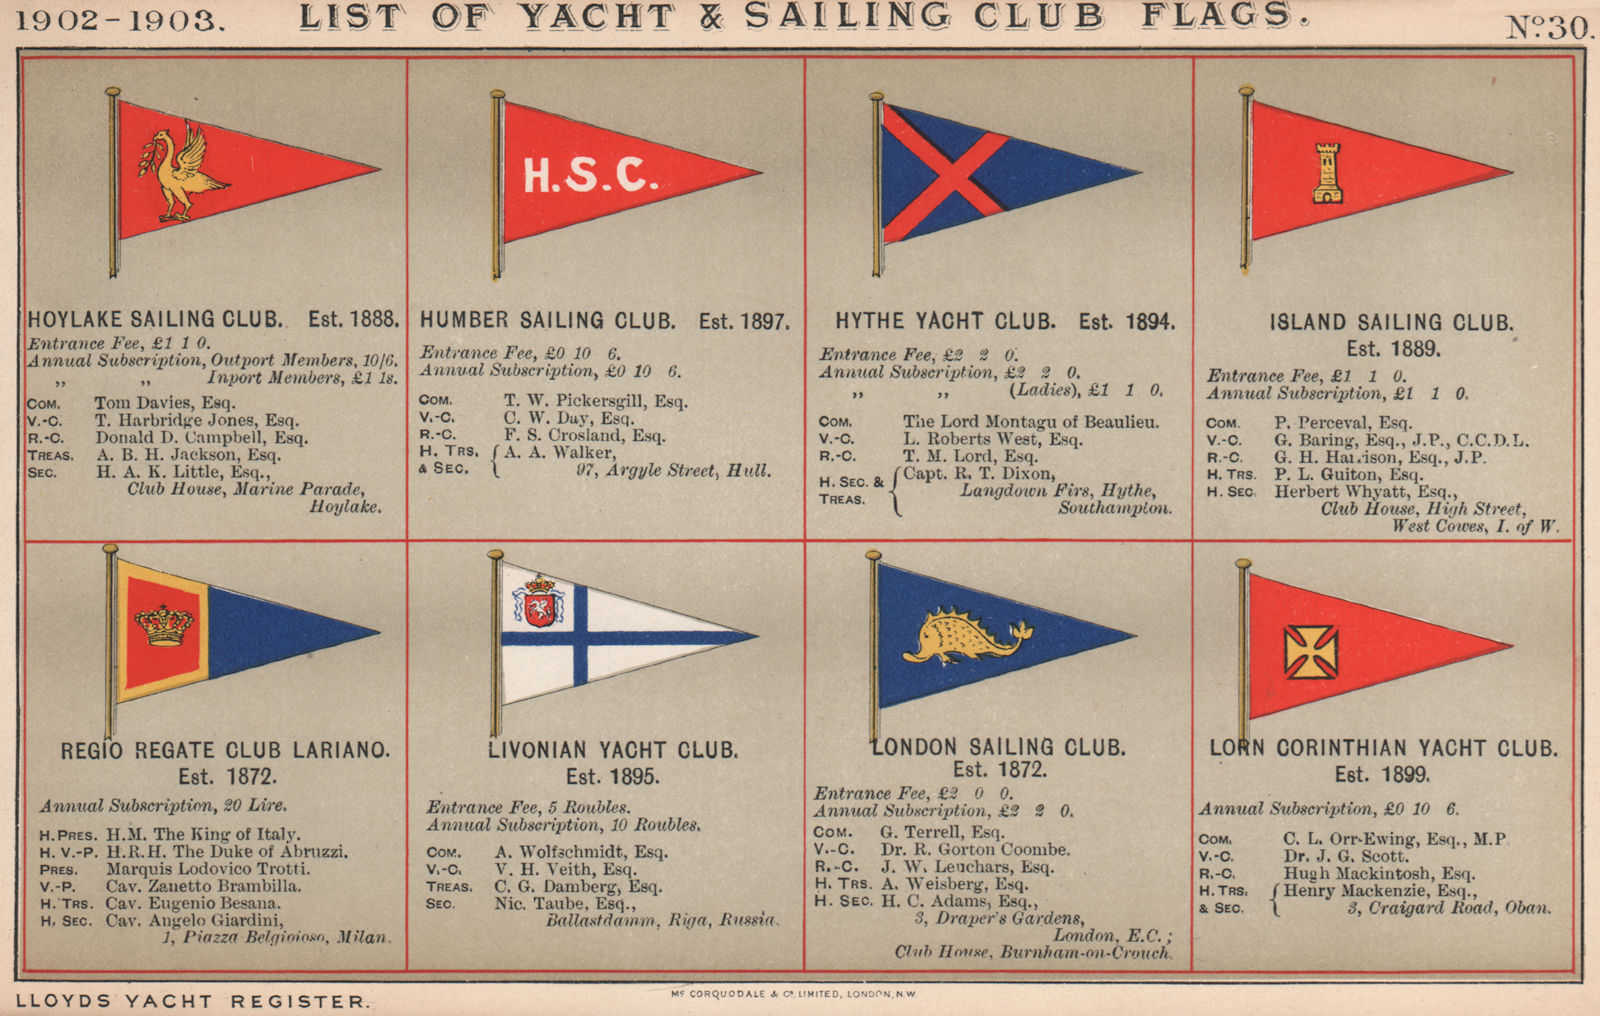 YACHT & SAILING CLUB FLAGS H-L. Hoylake- Hythe - London - Lorn Corinthian   1902